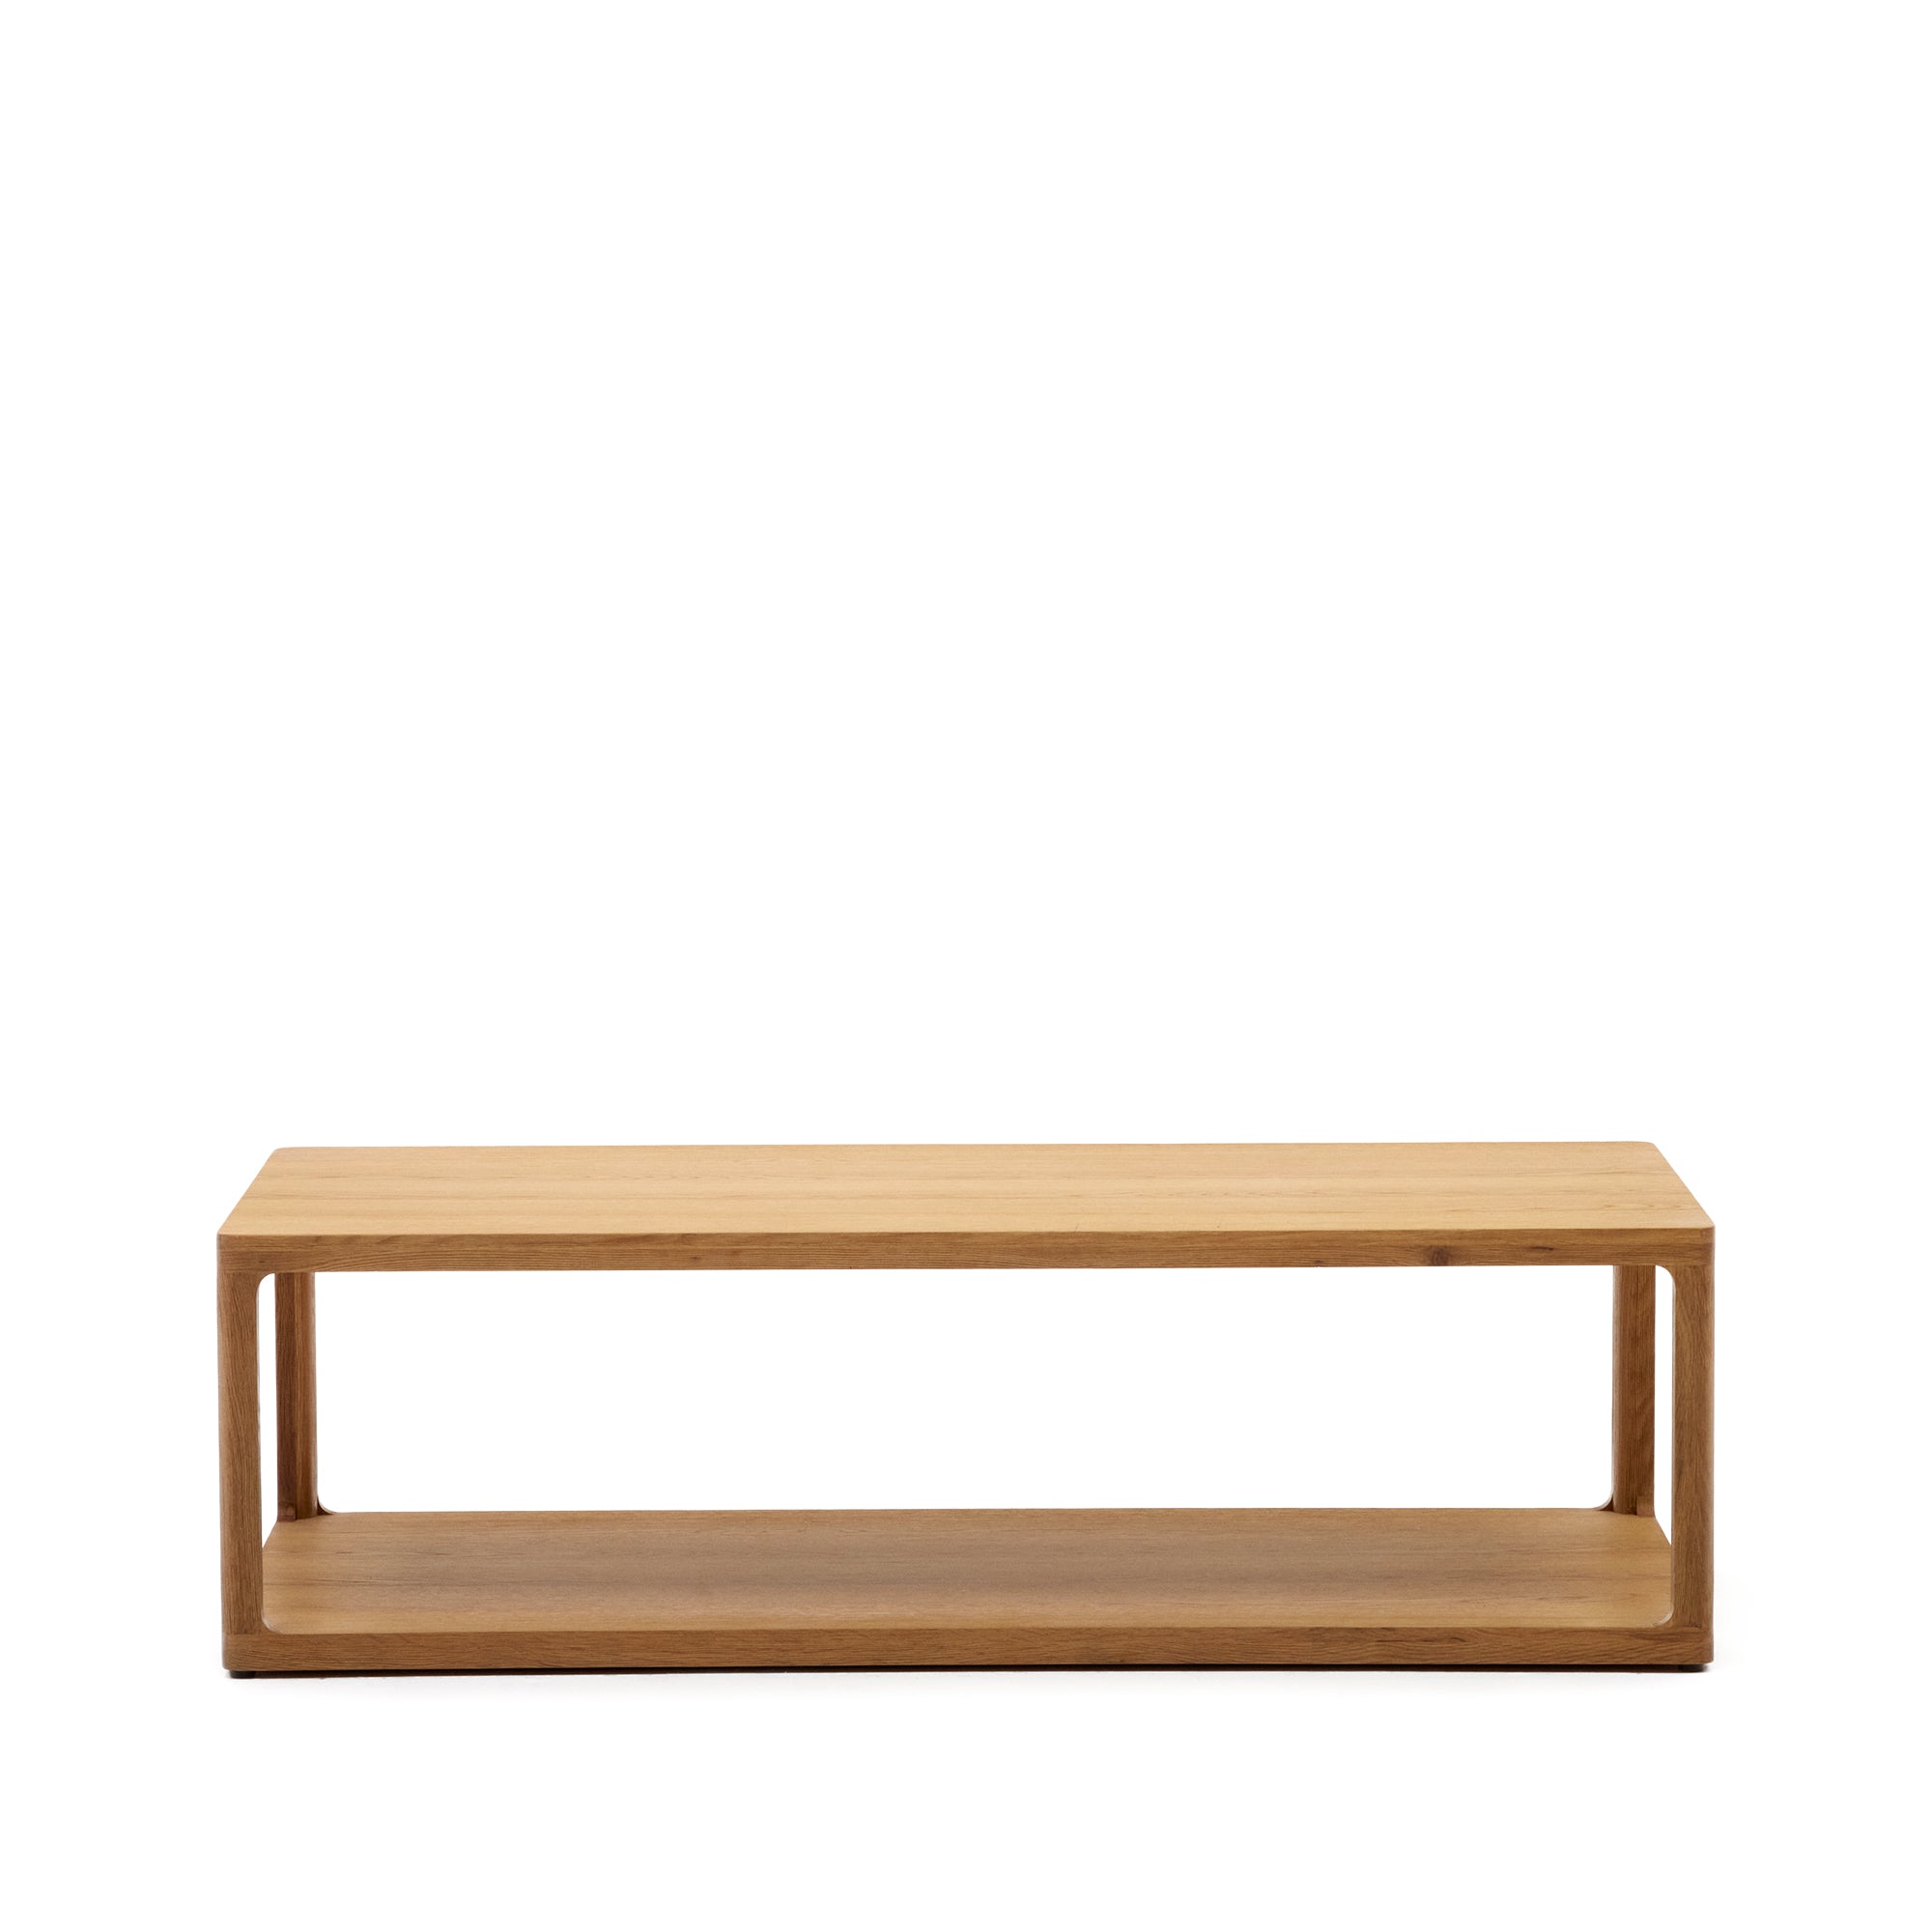 Maymai oak wood coffee table 140 x 70 cm